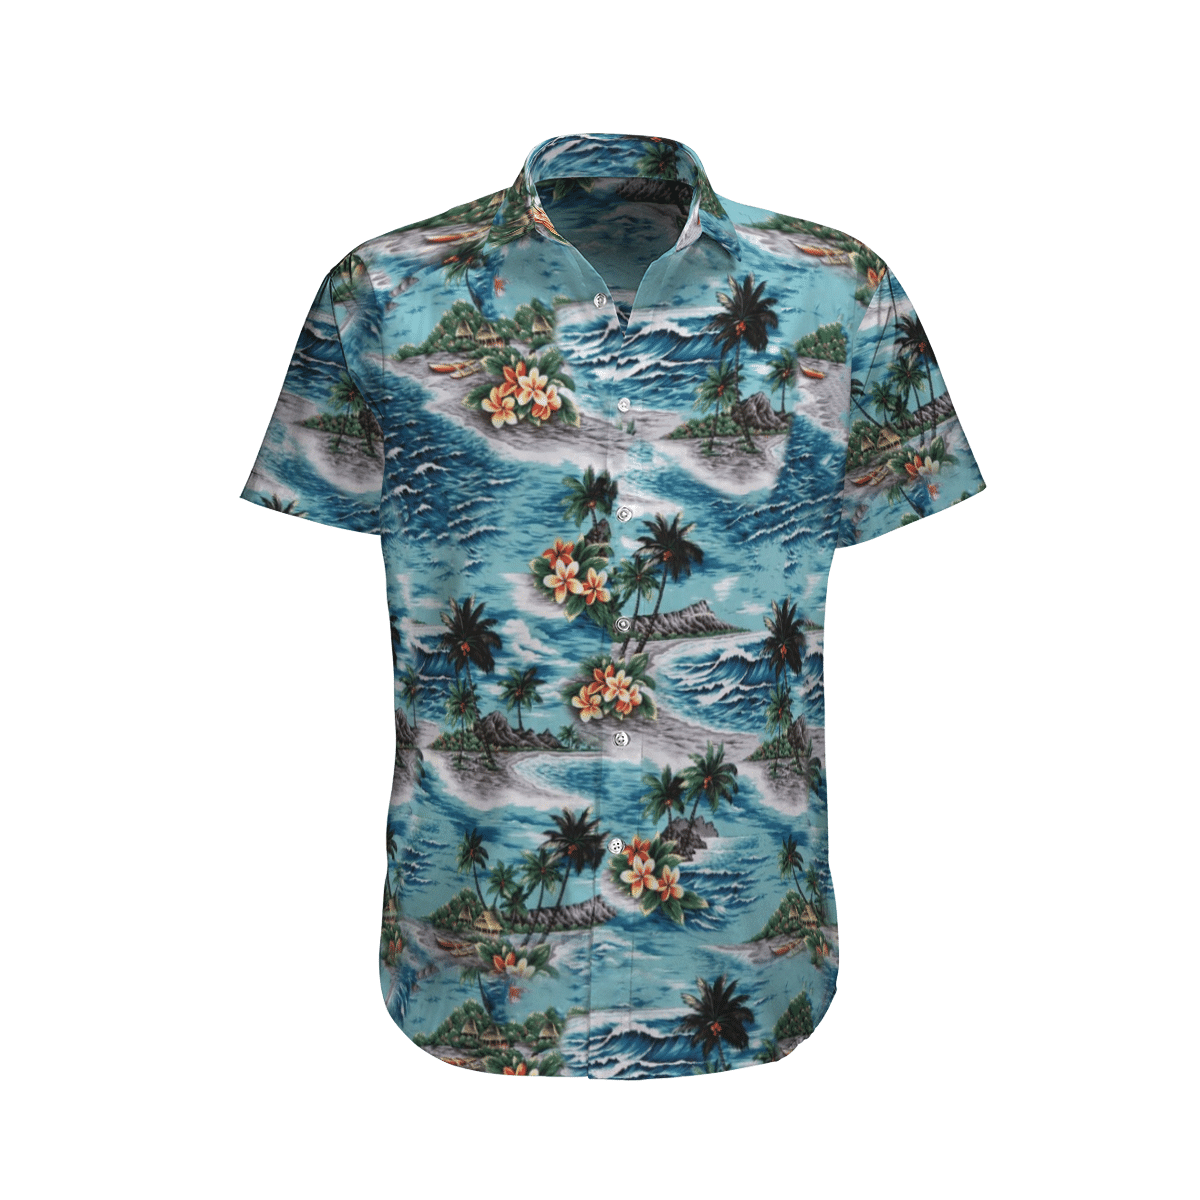 Get a new Hawaiian shirt to enjoy summer vacation 2